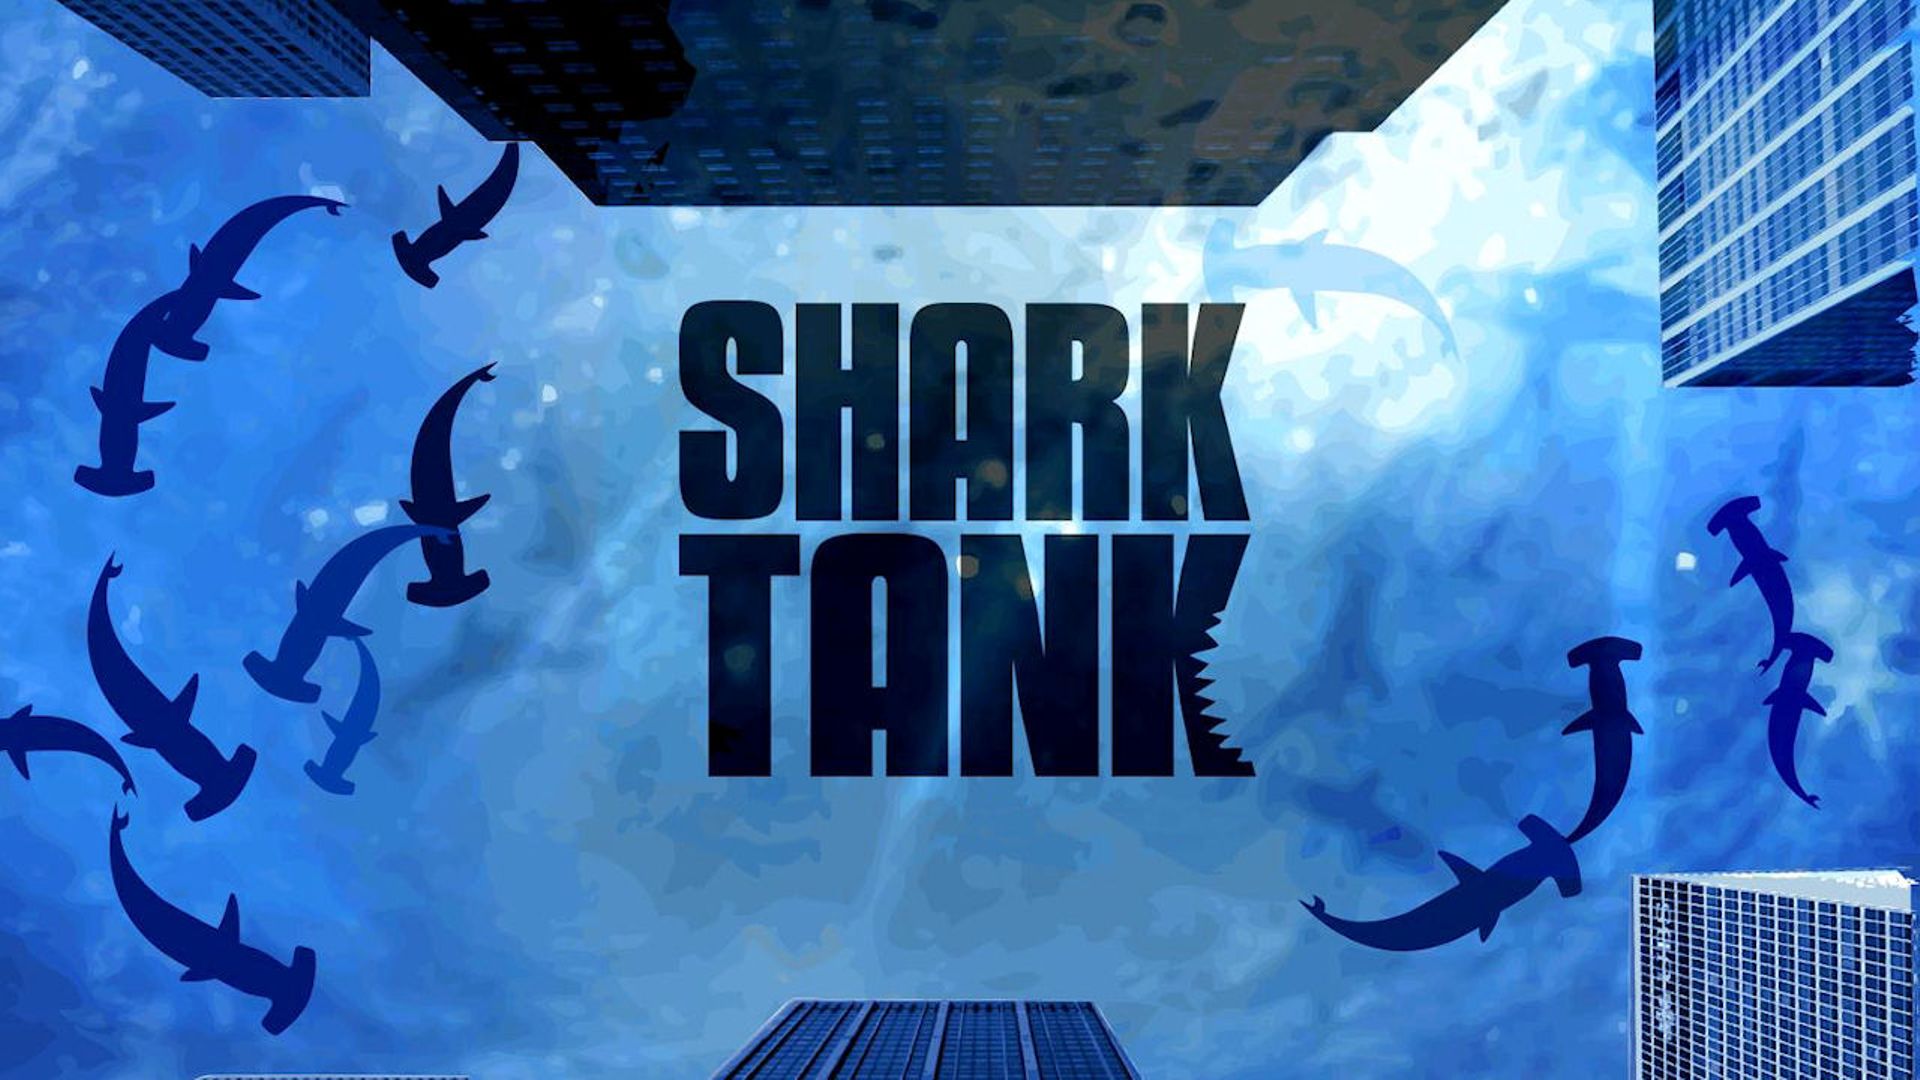 30, 2020 (National Live+3 Day Program Ratings)'Shark Tank' Grows ...